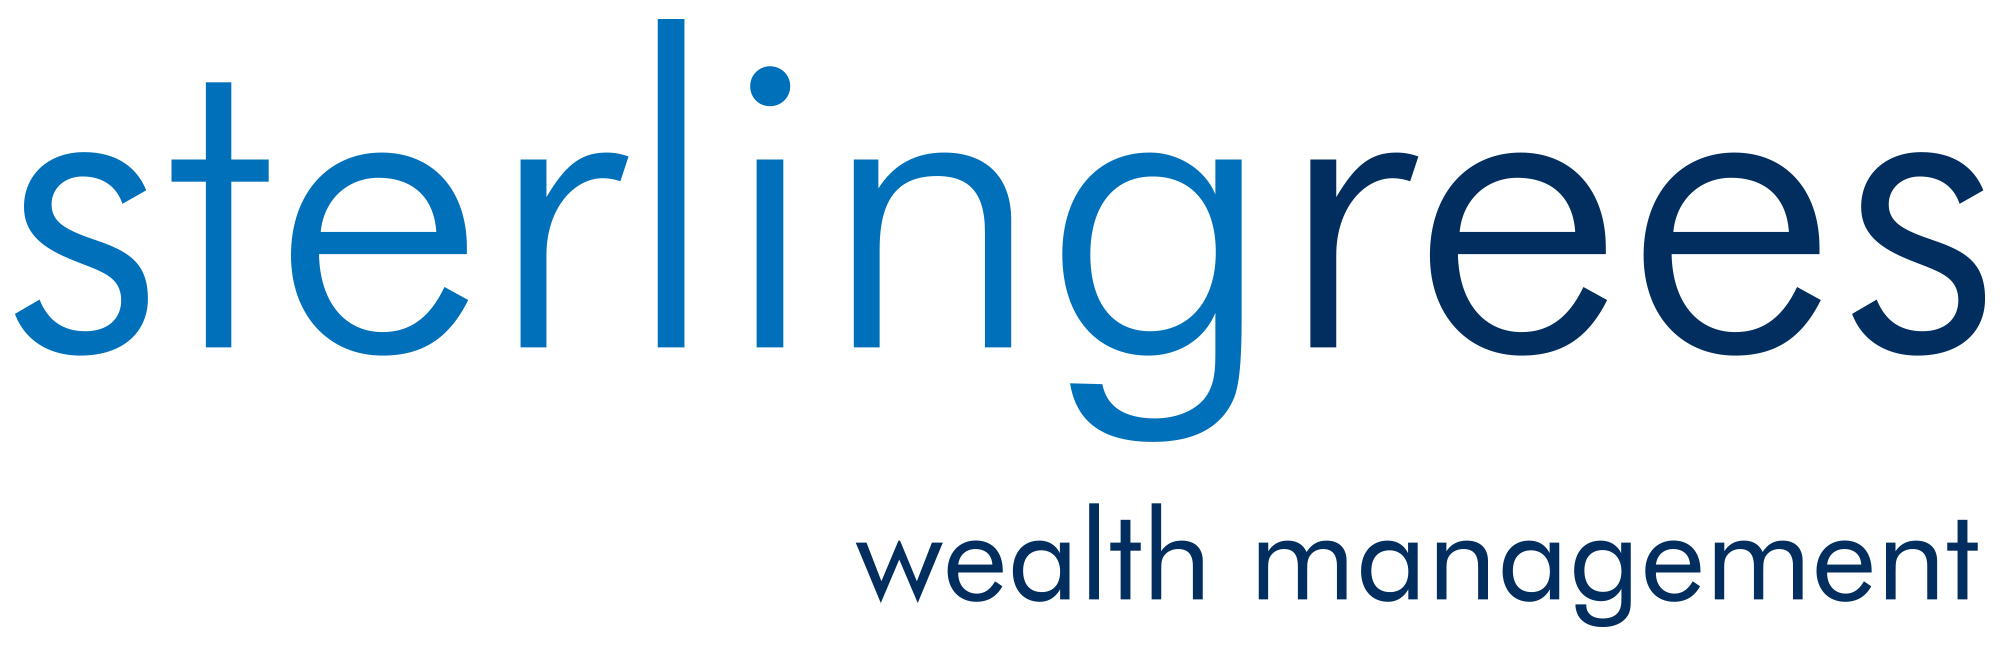 Sterling Rees Wealth Management